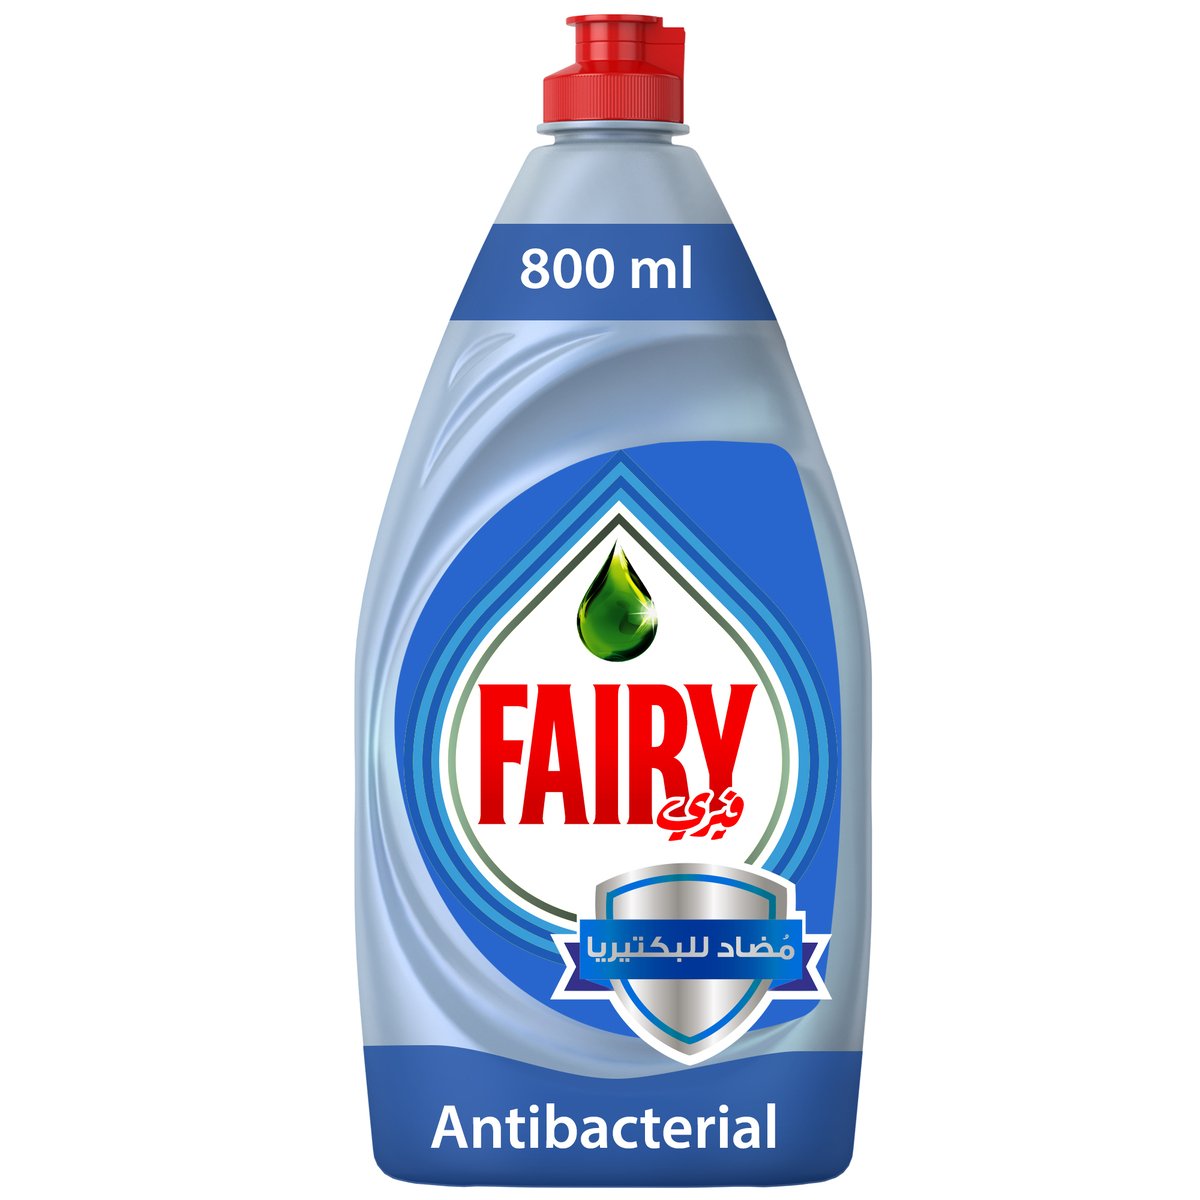 Fairy Platinum Antibacterial Dish Washing Liquid Soap 800ml